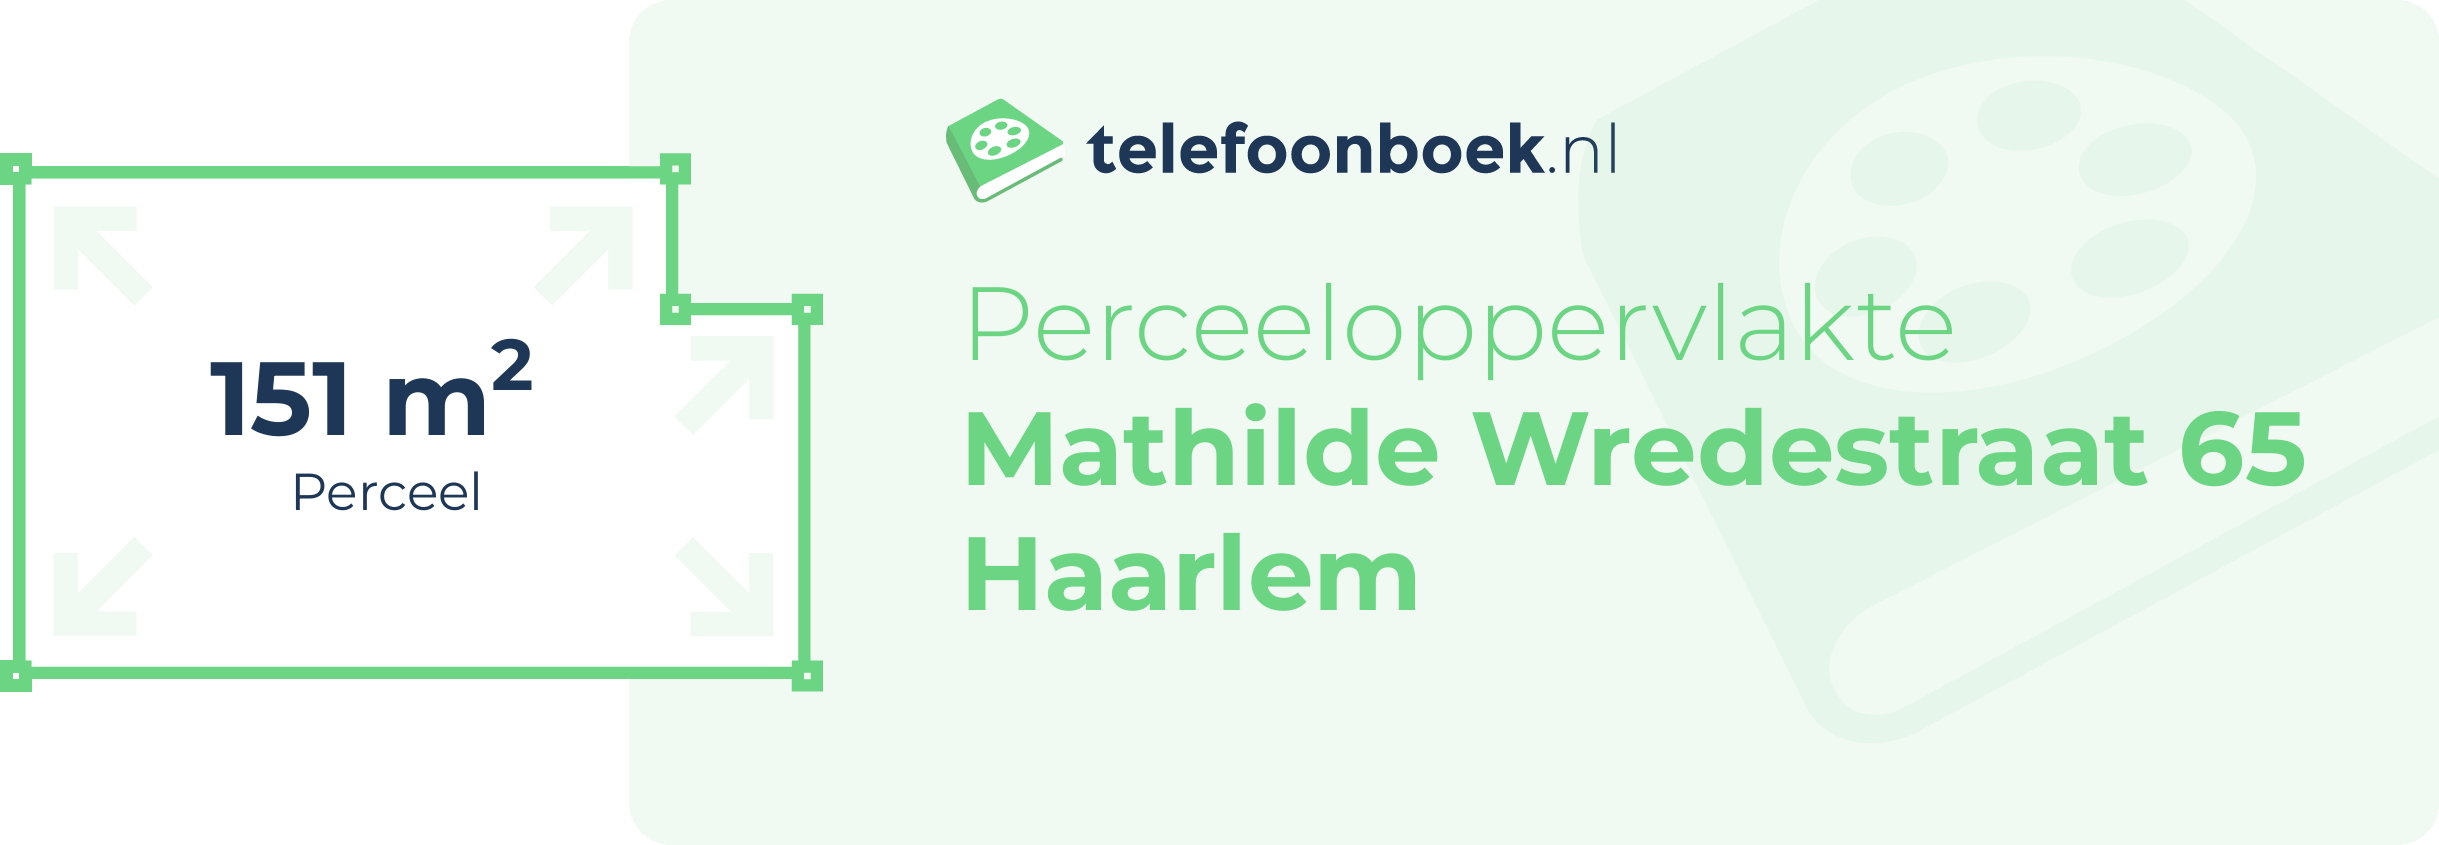 Perceeloppervlakte Mathilde Wredestraat 65 Haarlem